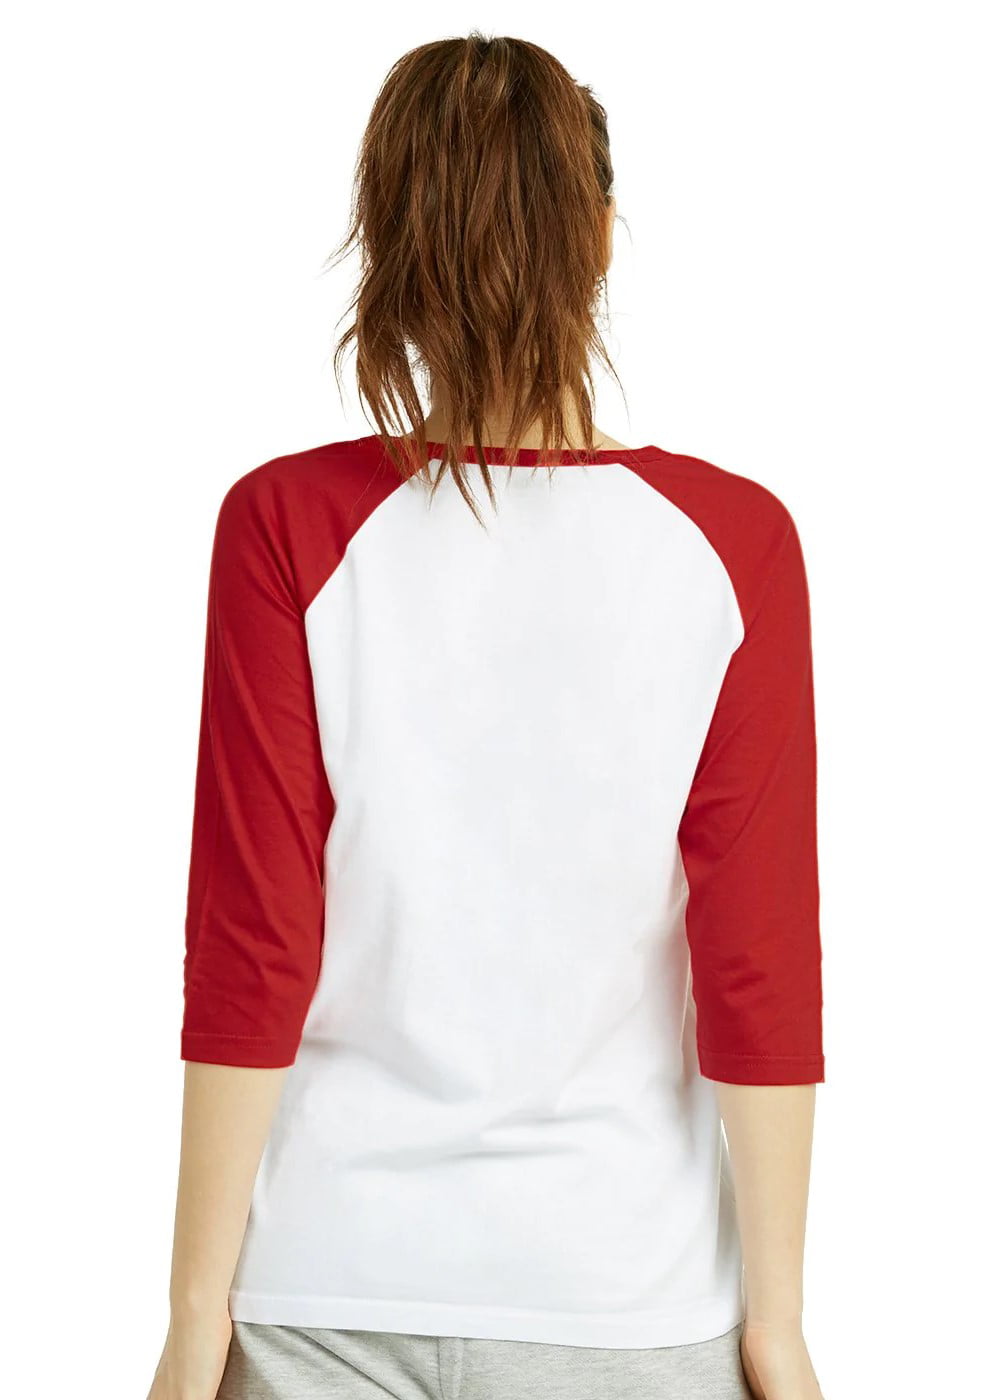 47 Brand Women's St. Louis Cardinals Triple Crown Raglan T-Shirt - Macy's